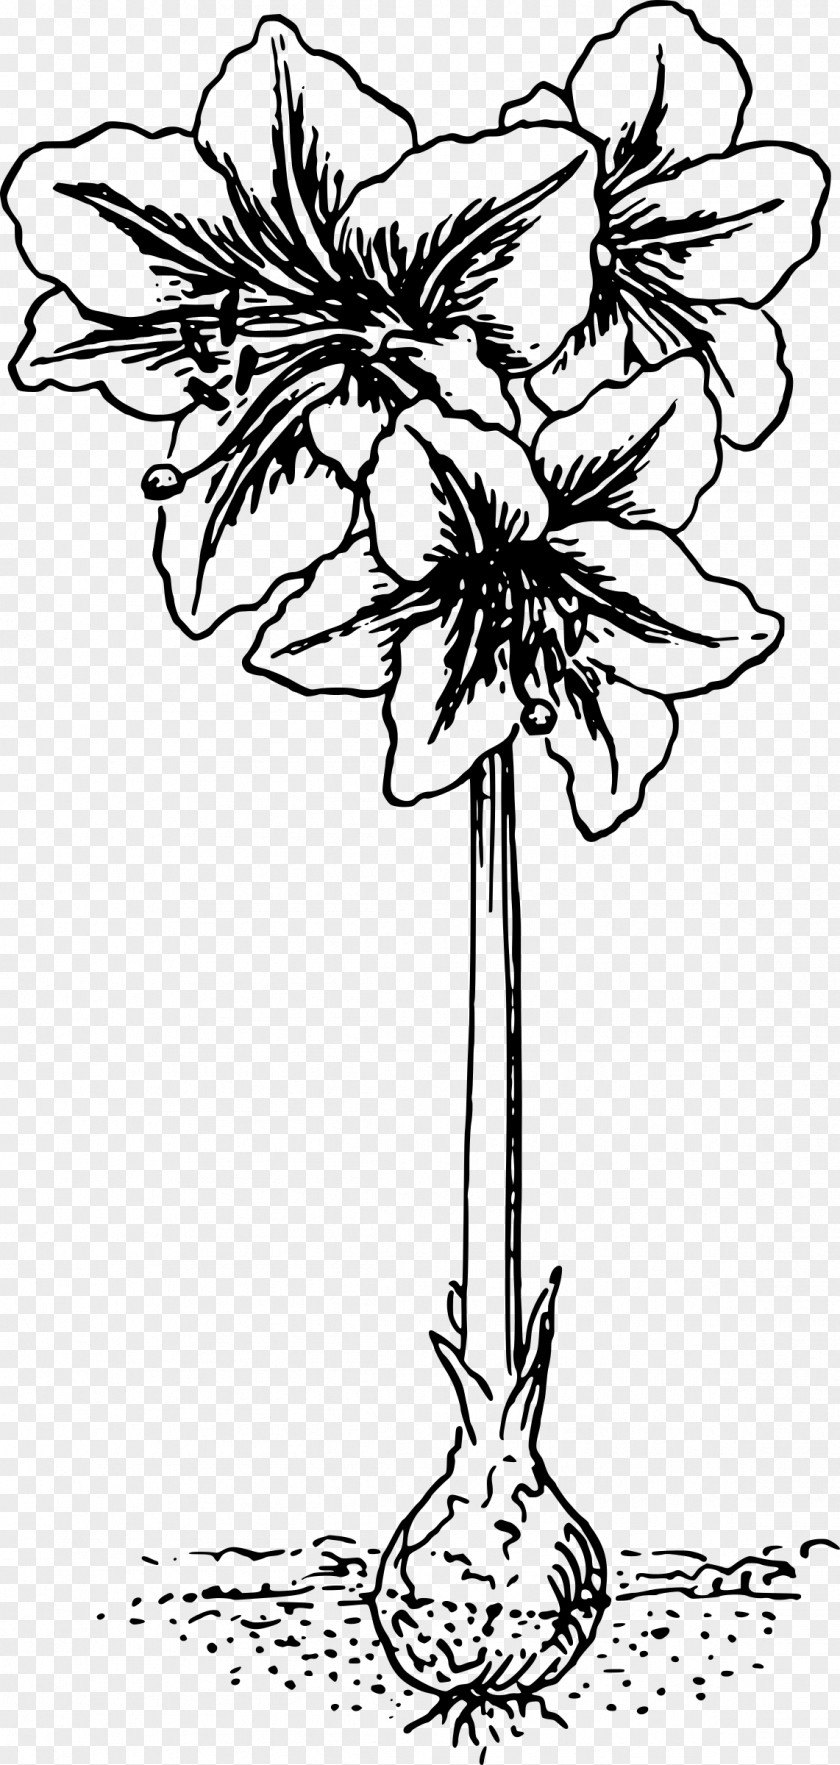 Public Domain Botanical Illustrations Tattoo Clip Art Amaryllis Vector Graphics Image PNG